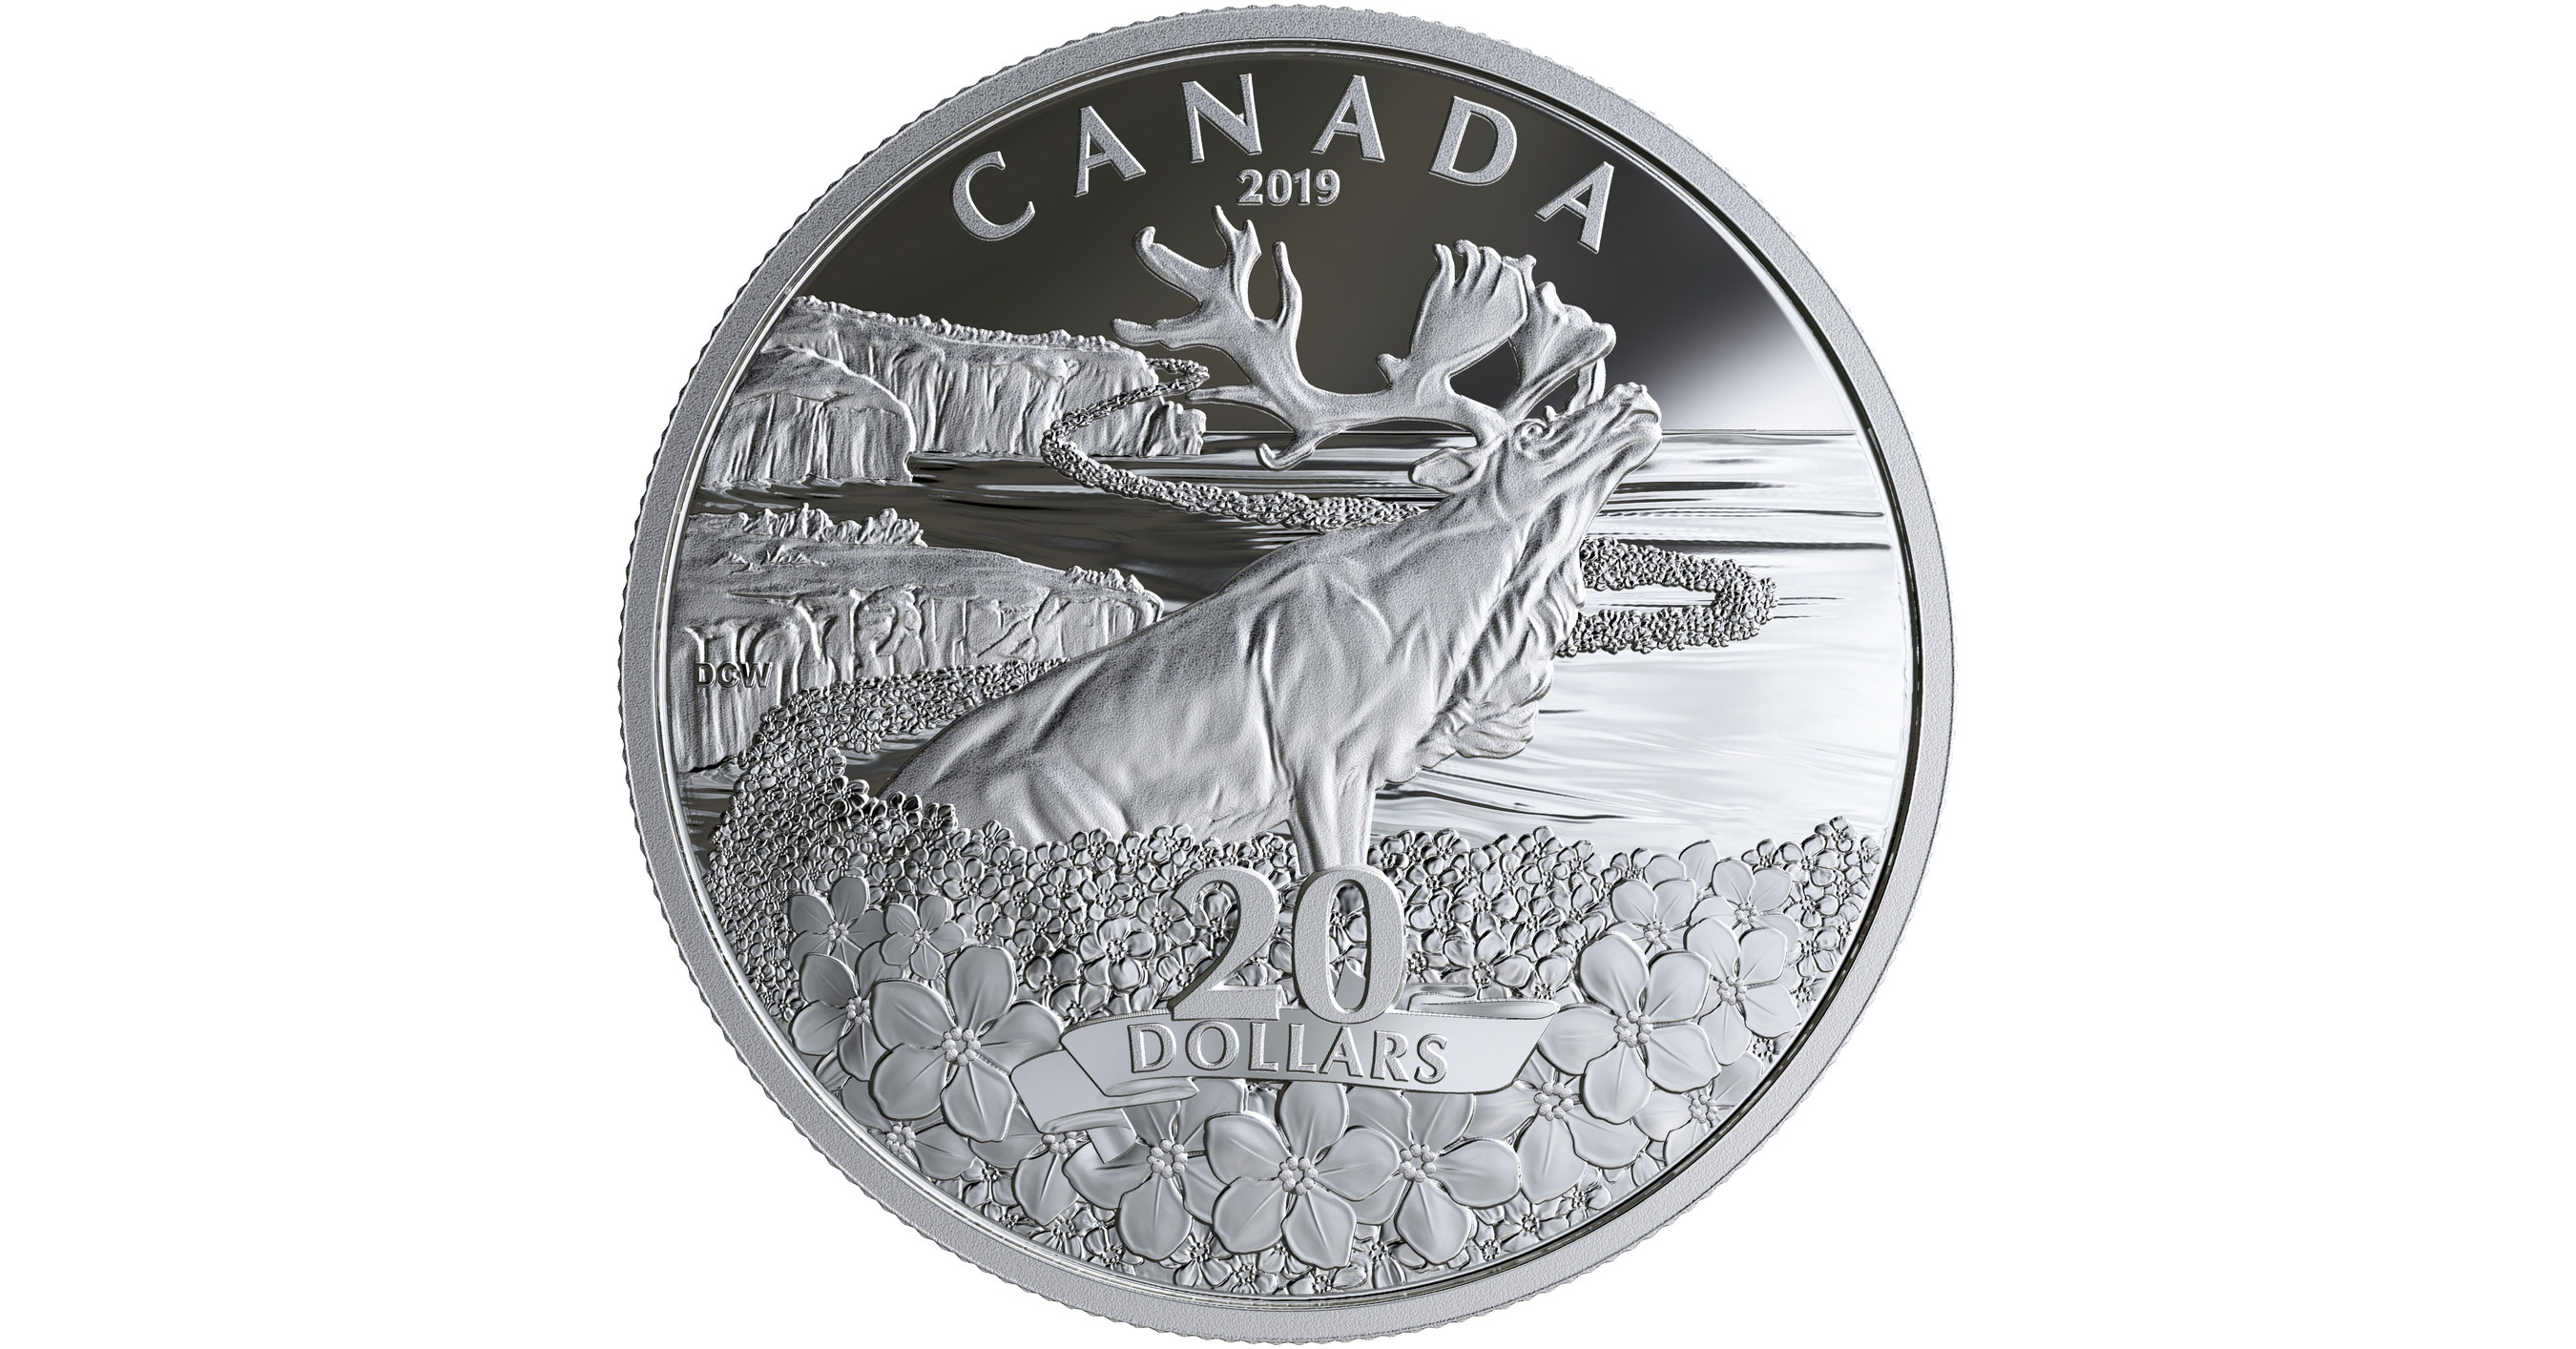 Monnaie royale canadienne 